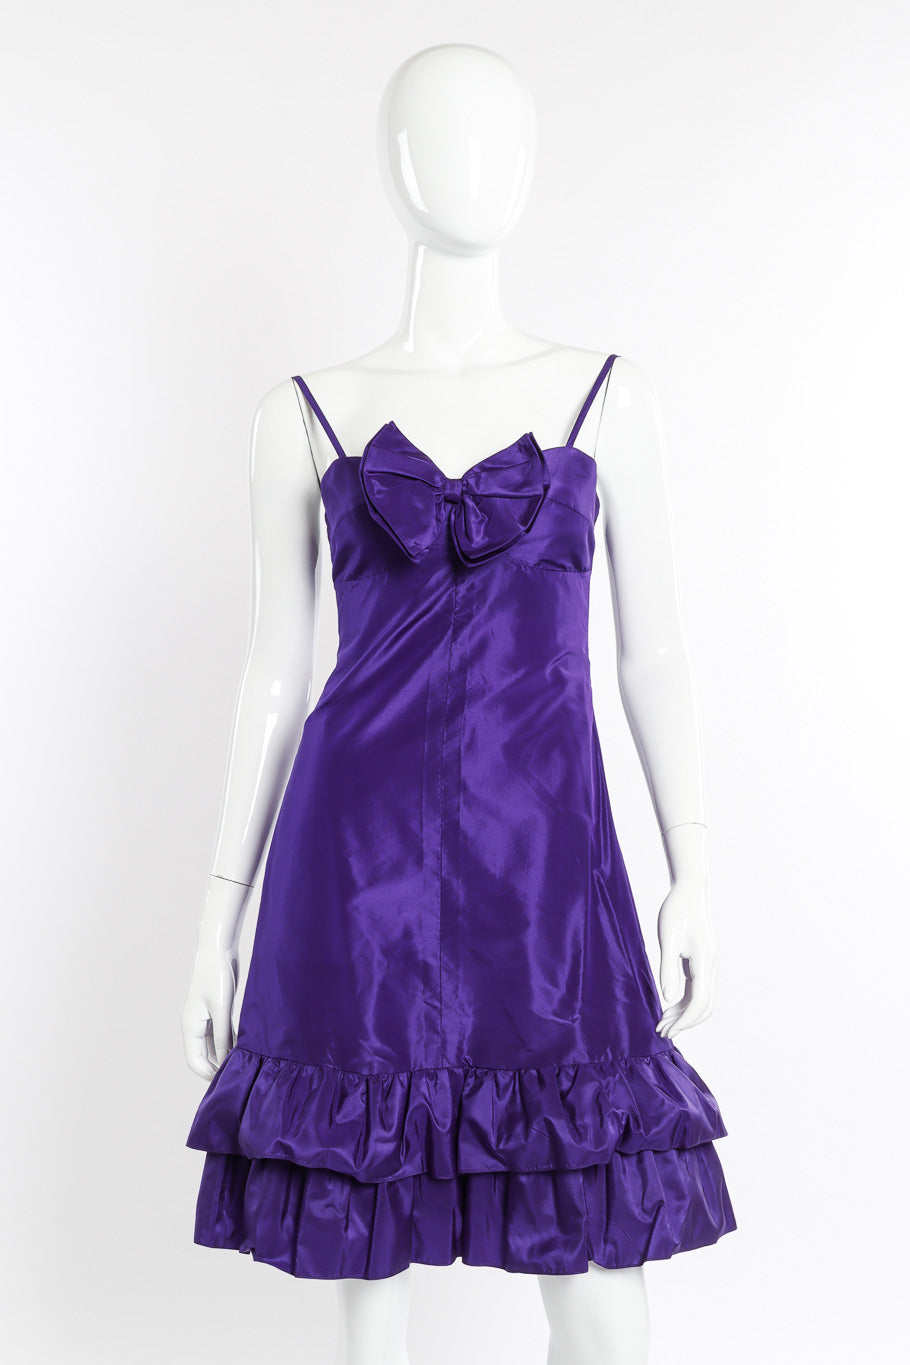 Velvet Bow Dress by Nina Ricci on mannequin lining only @recessla